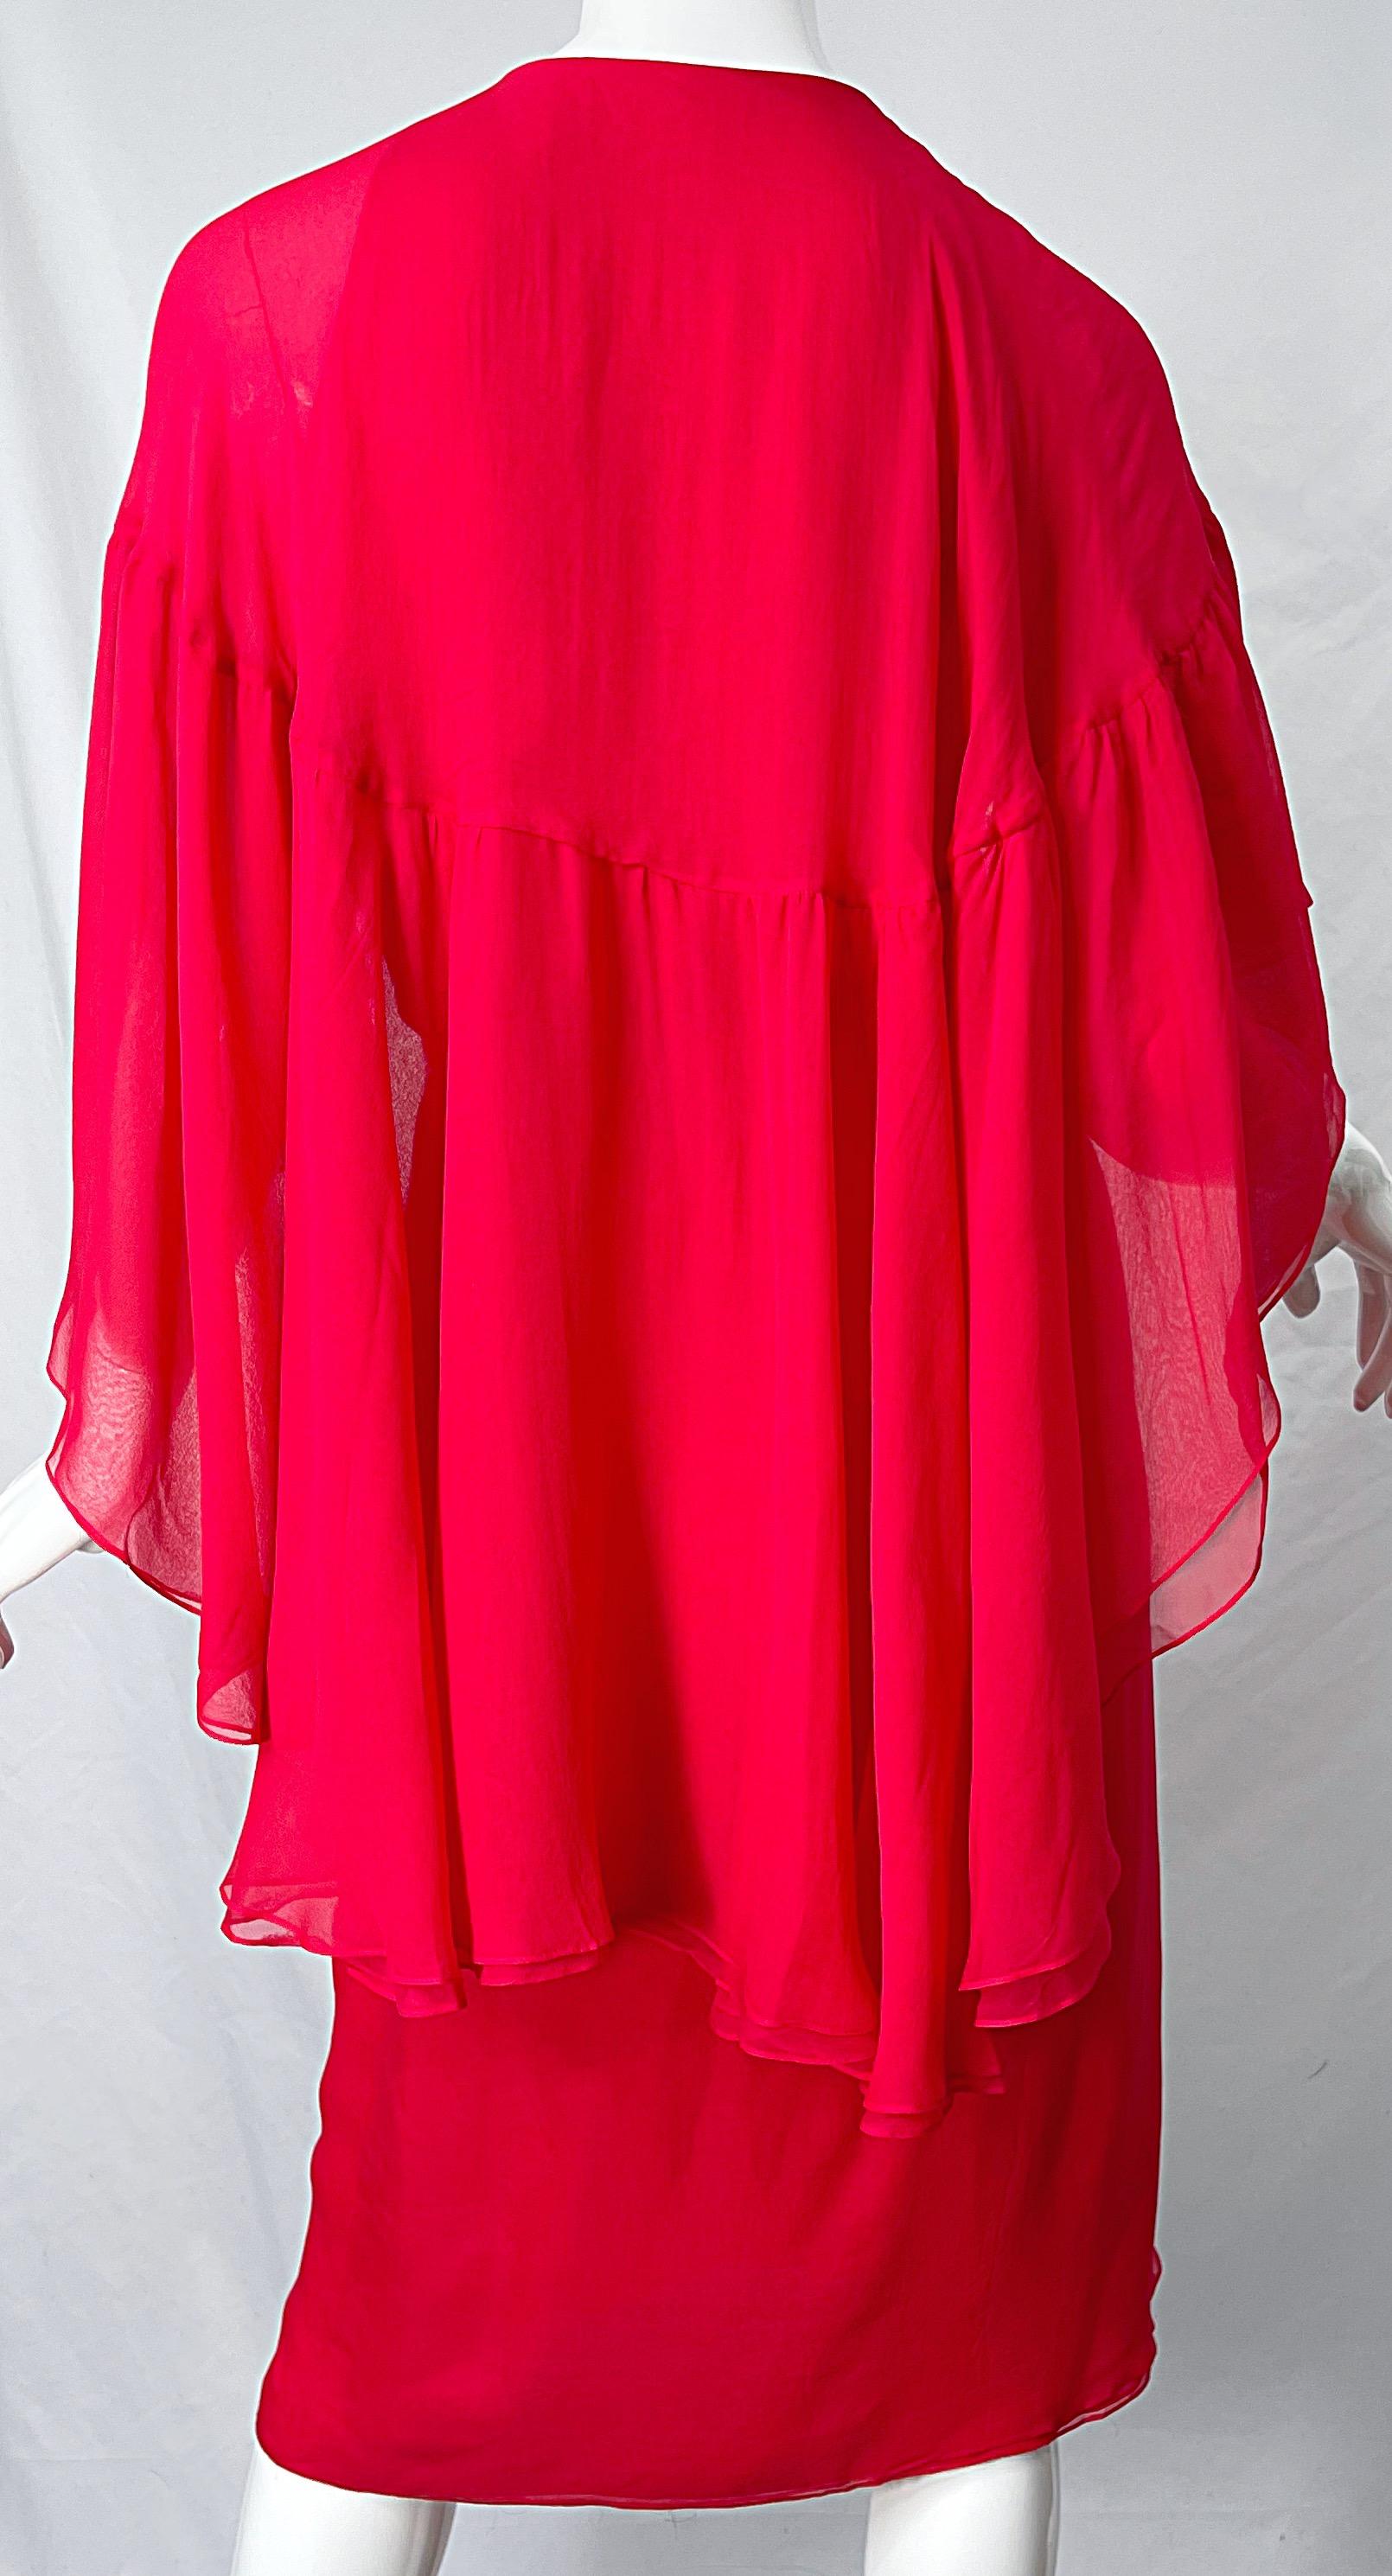 1970s Halston Lipstick Red Silk Chiffon Vintage 70s Wrap Cape Dress For Sale 1